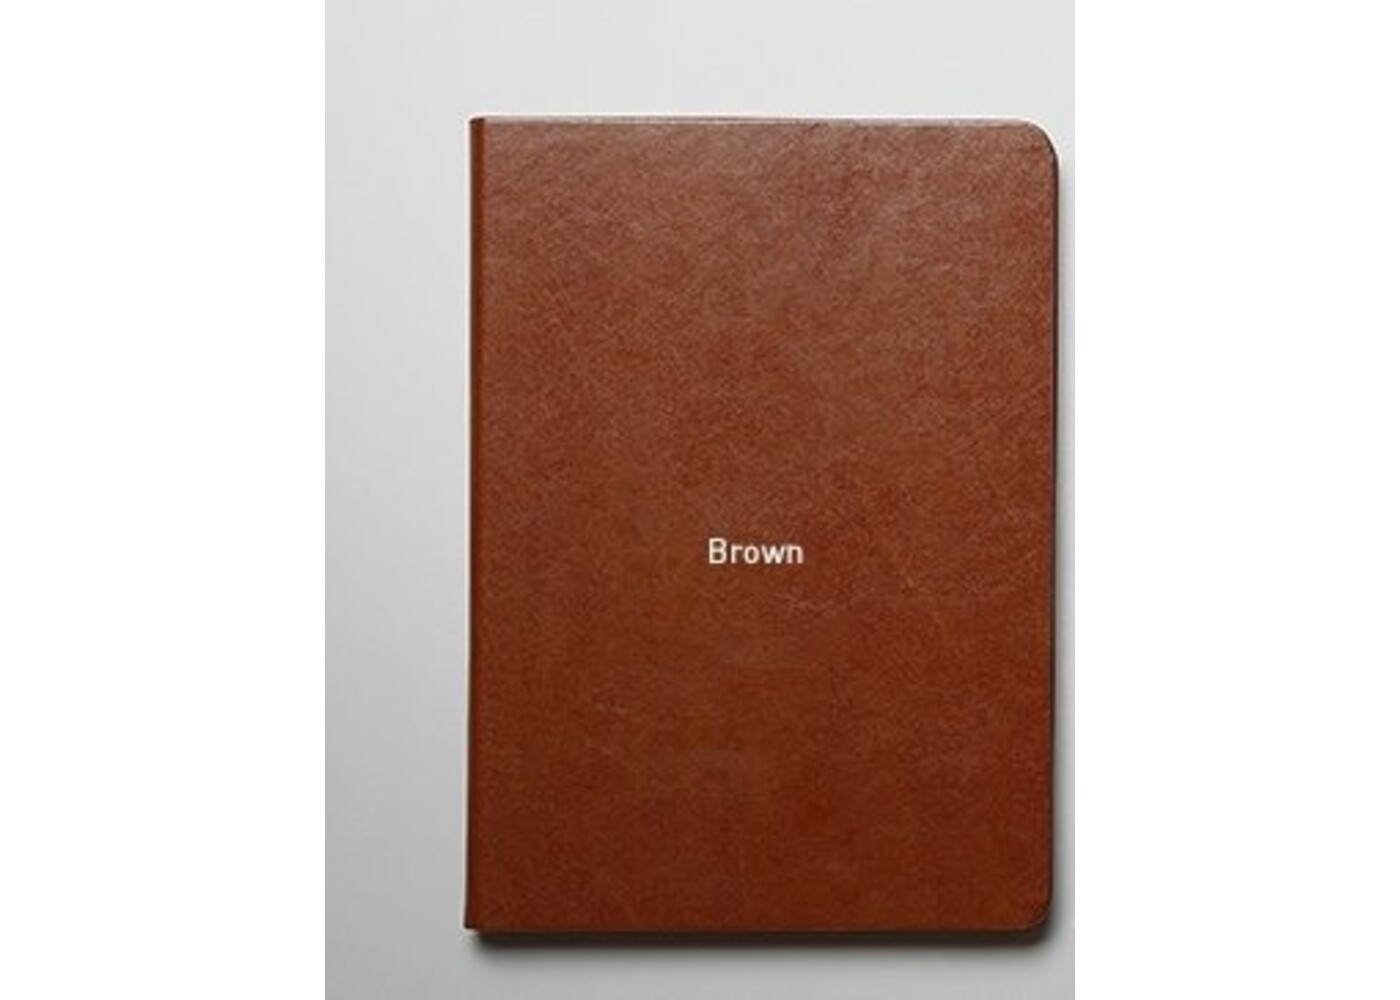 Avoc Galaxy Note 10.1  Masstige Toscane Diary Avoc - Brown